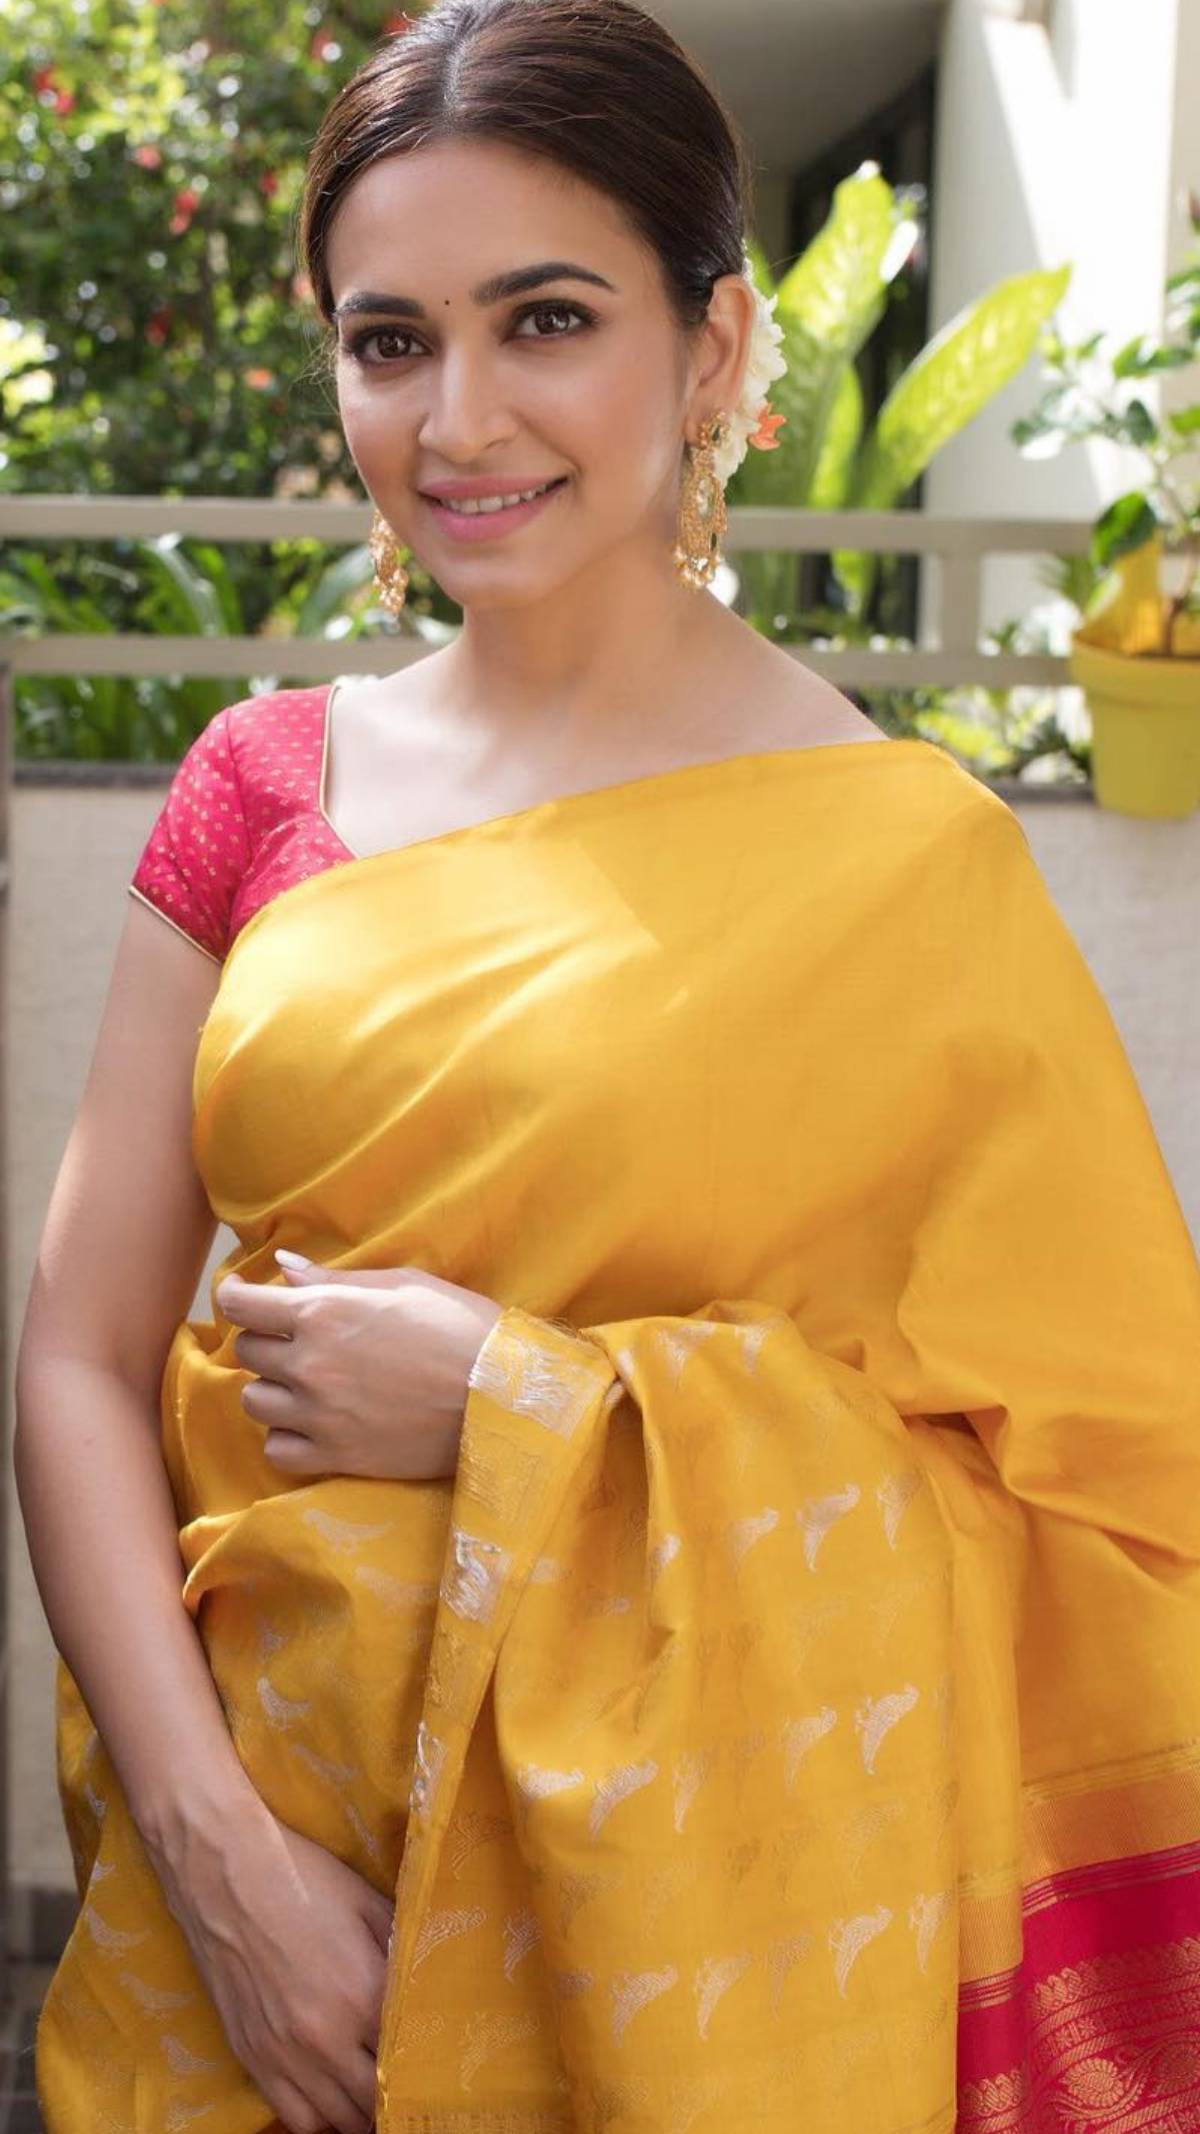 Kriti Kharbanda looks beautiful in the yellow traditional silk saree